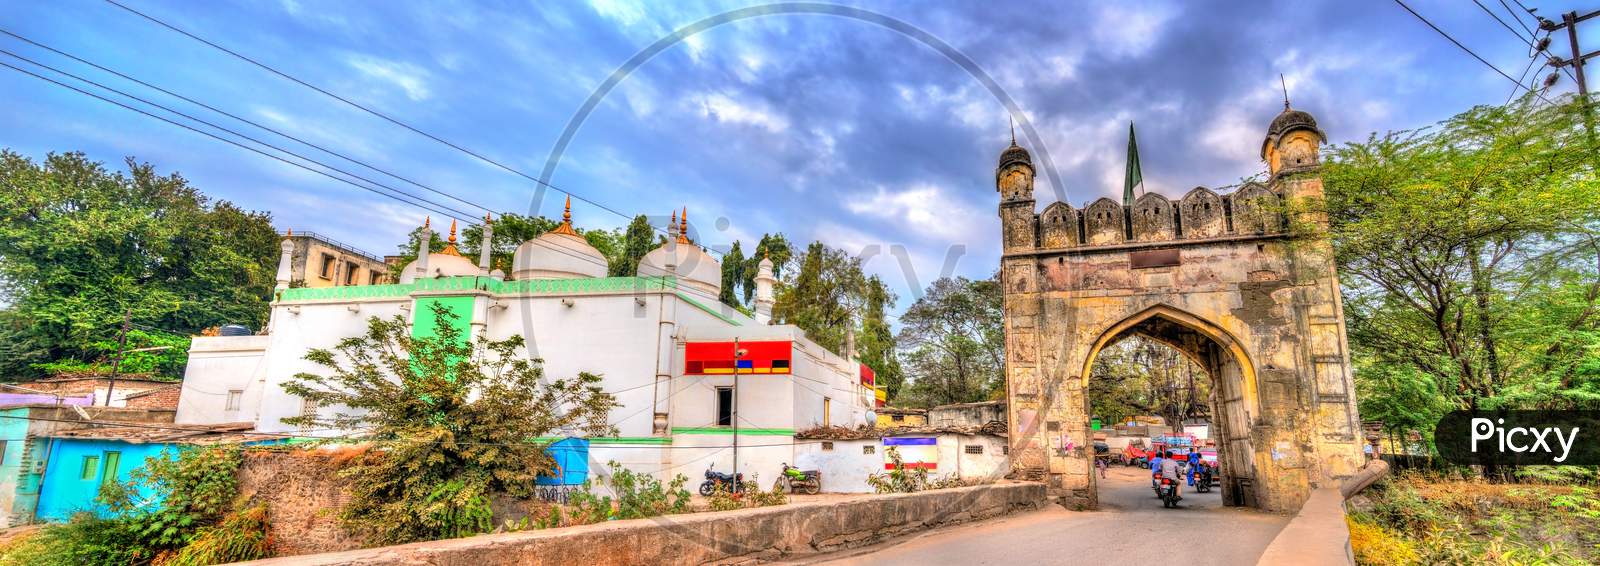 Jamil Baig Masjid Mosque And Mahmud Darwaza Gate In Aurangabad, India